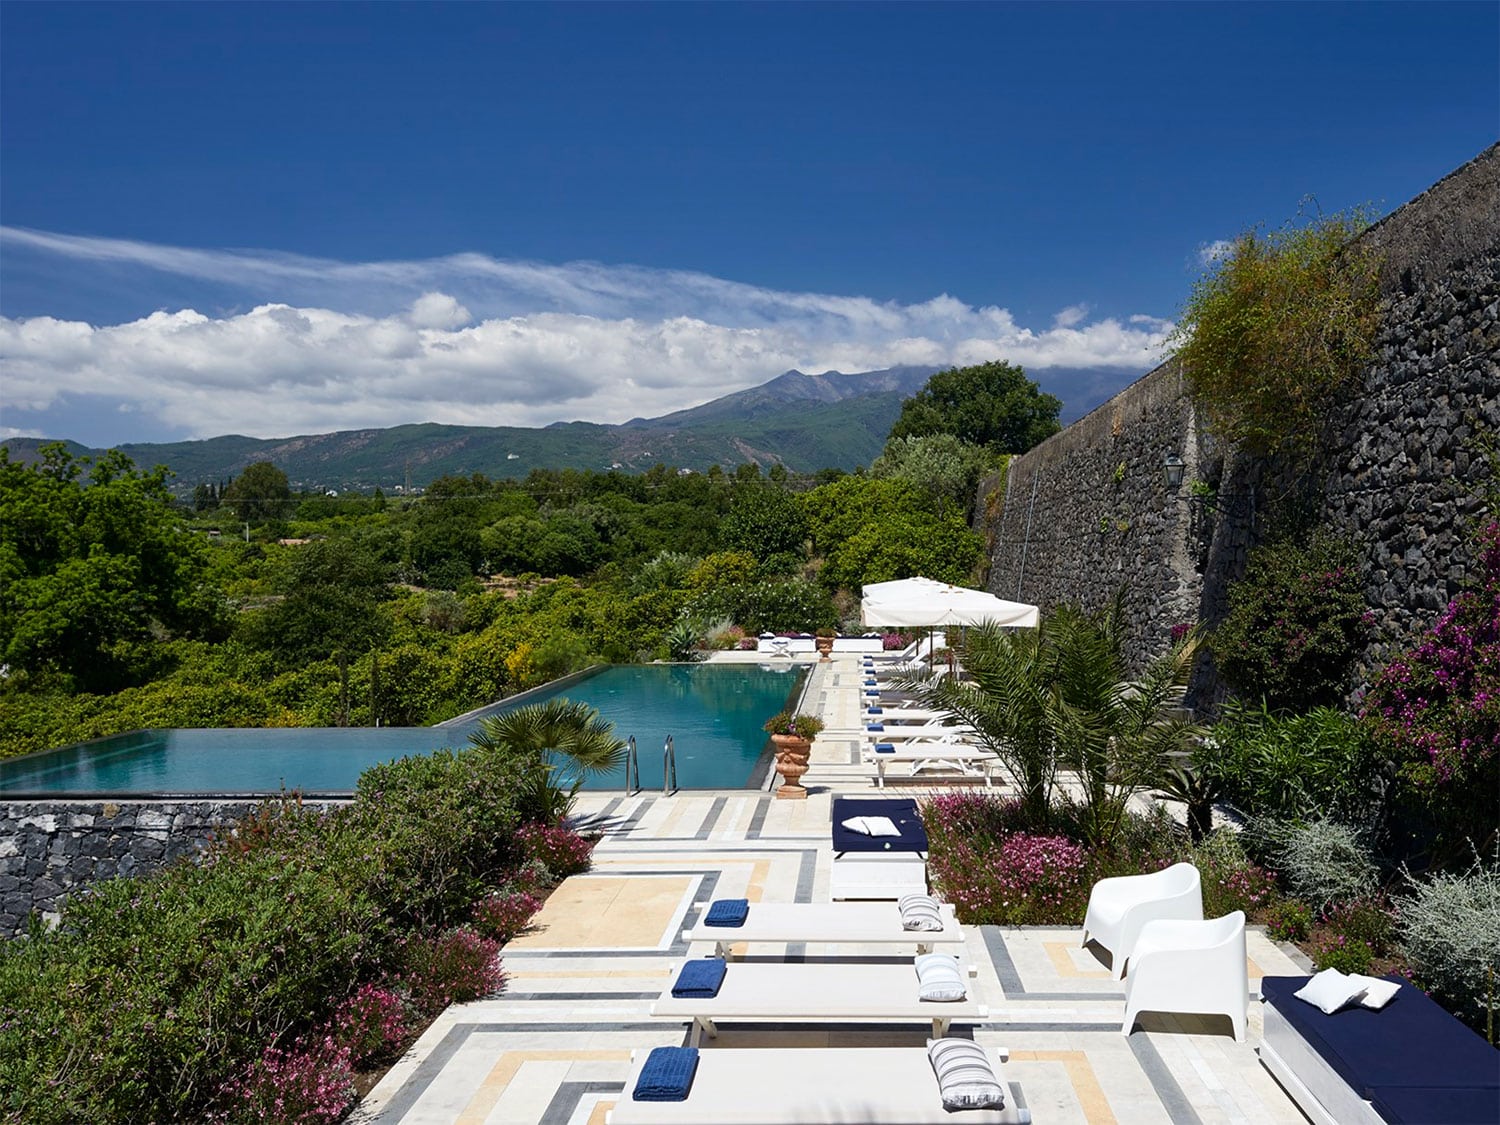 The private pool at Rocca delle Tre Contrade, a luxurious 12-bedroom villa located in Taormina, Sicily, Italy.